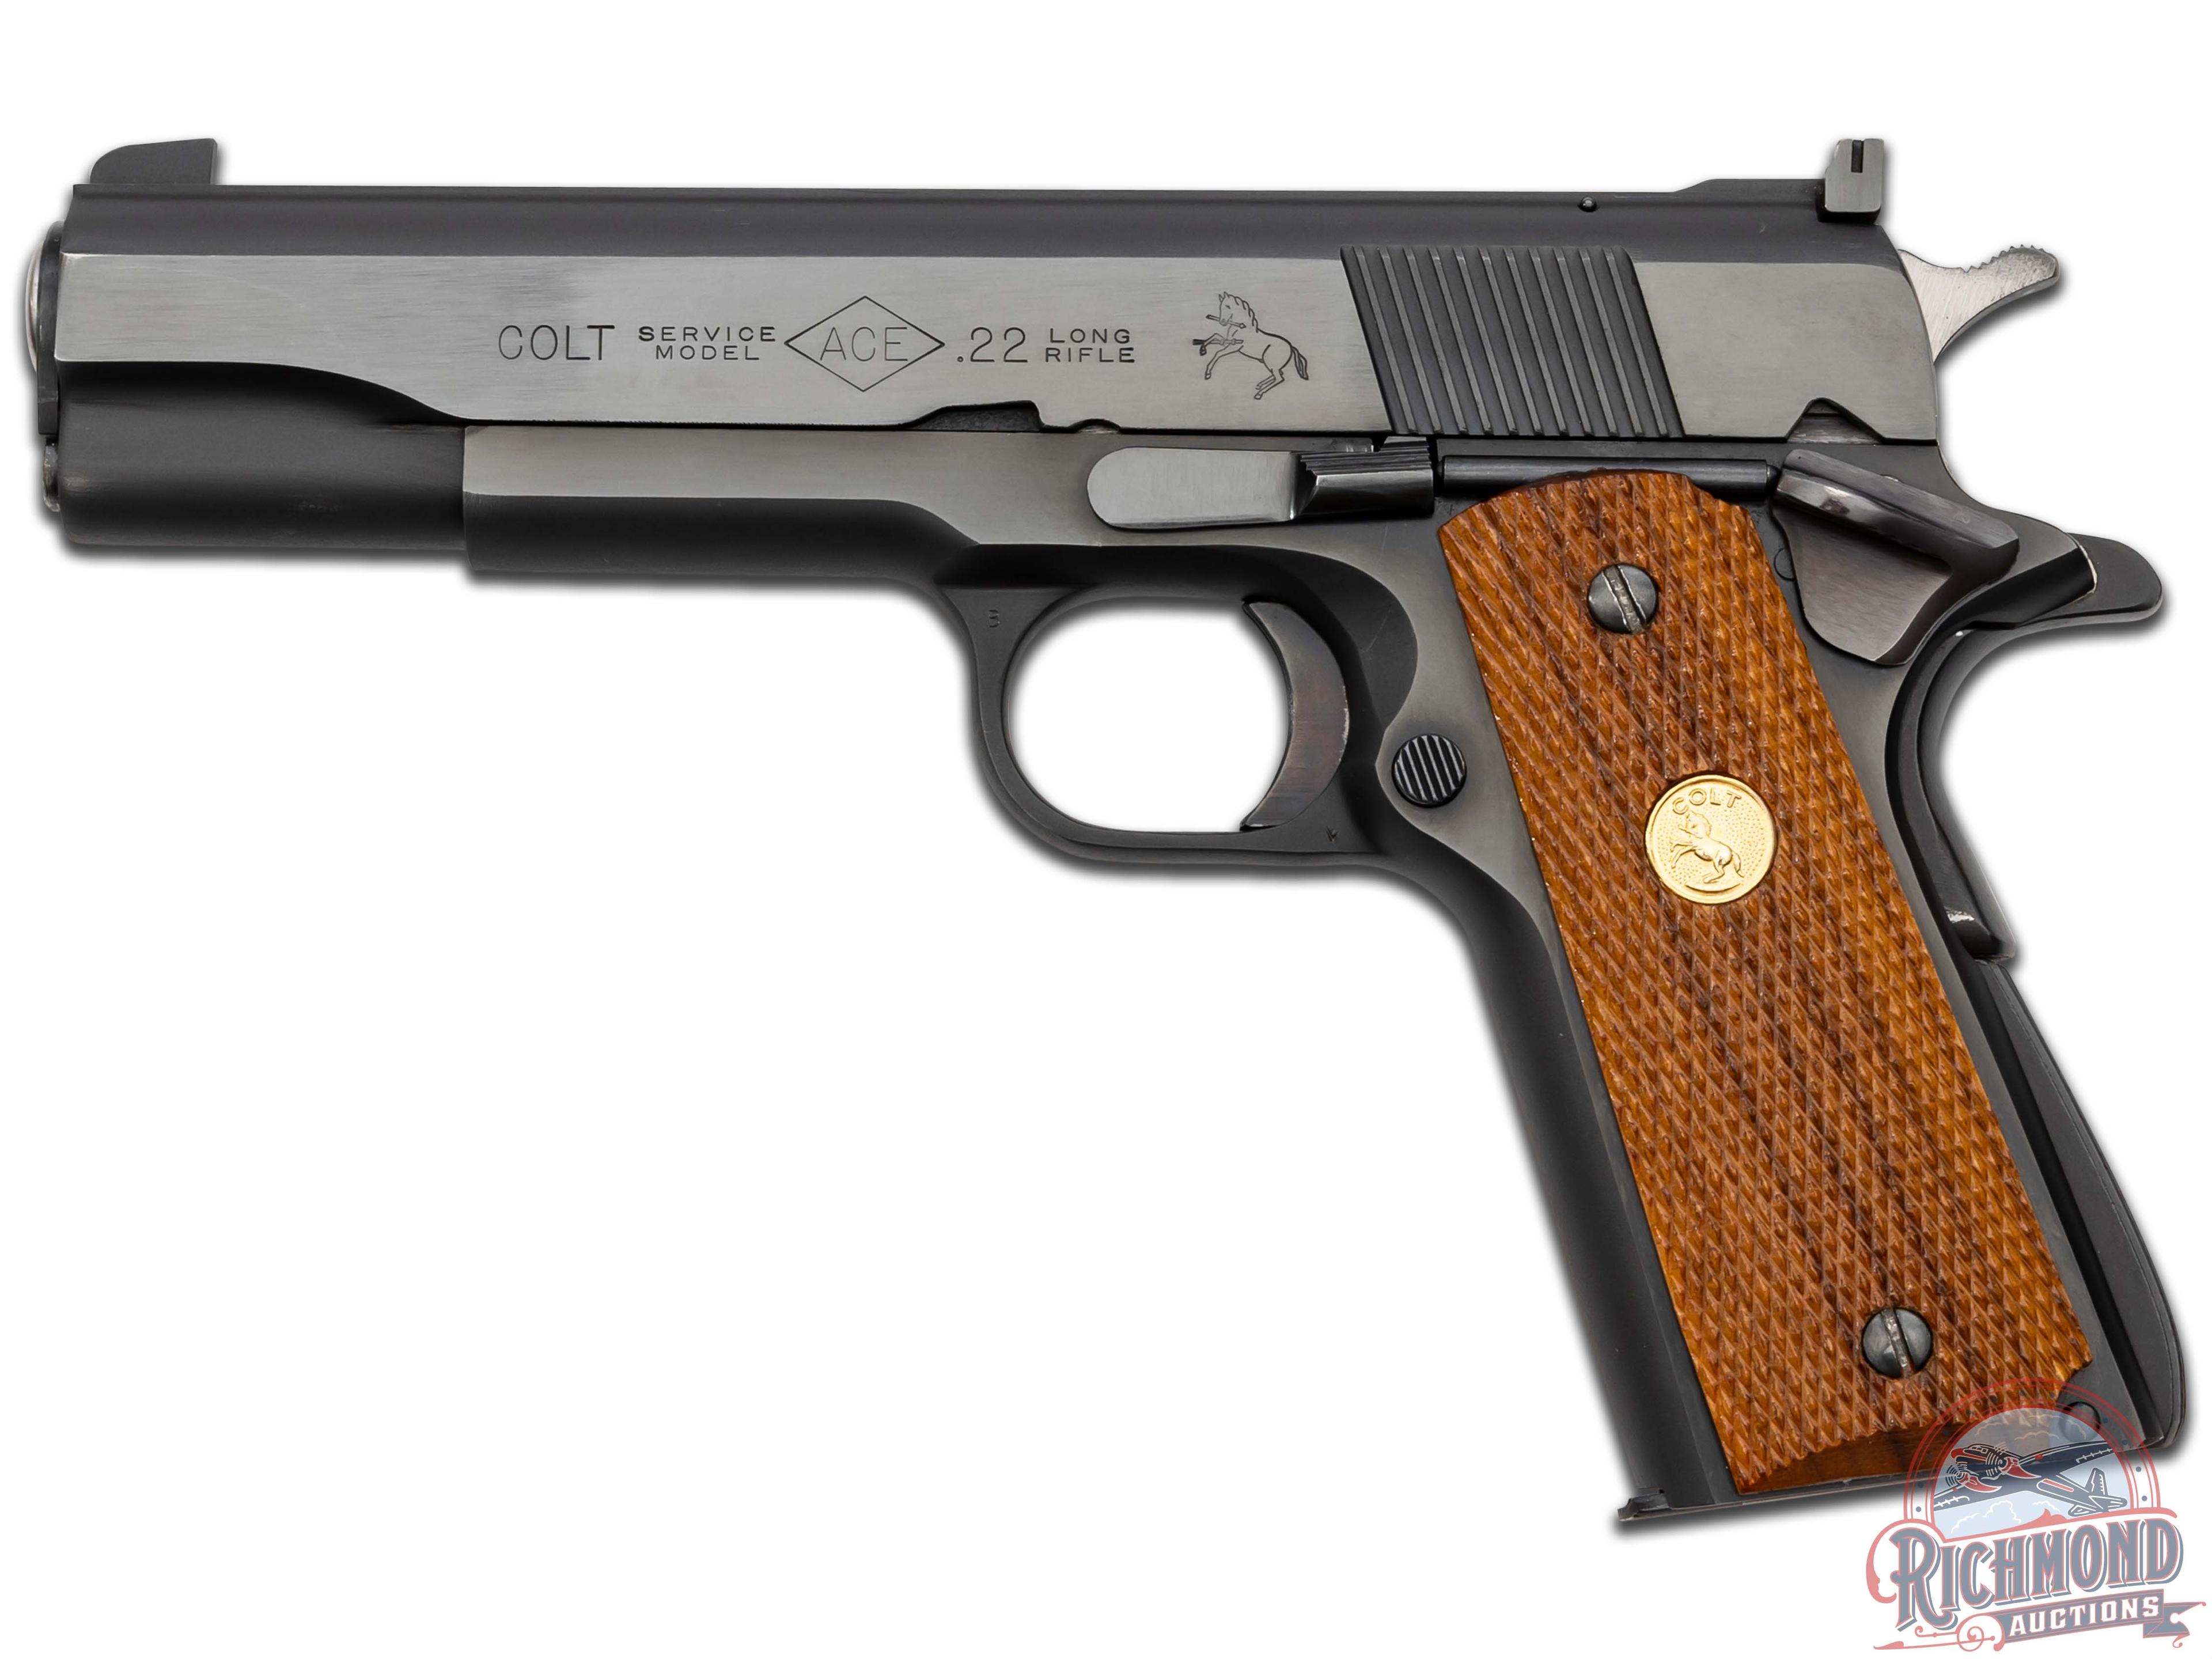 1981 Colt 1911 ACE .22 LR Semi-Automatic Pistol in Original Box